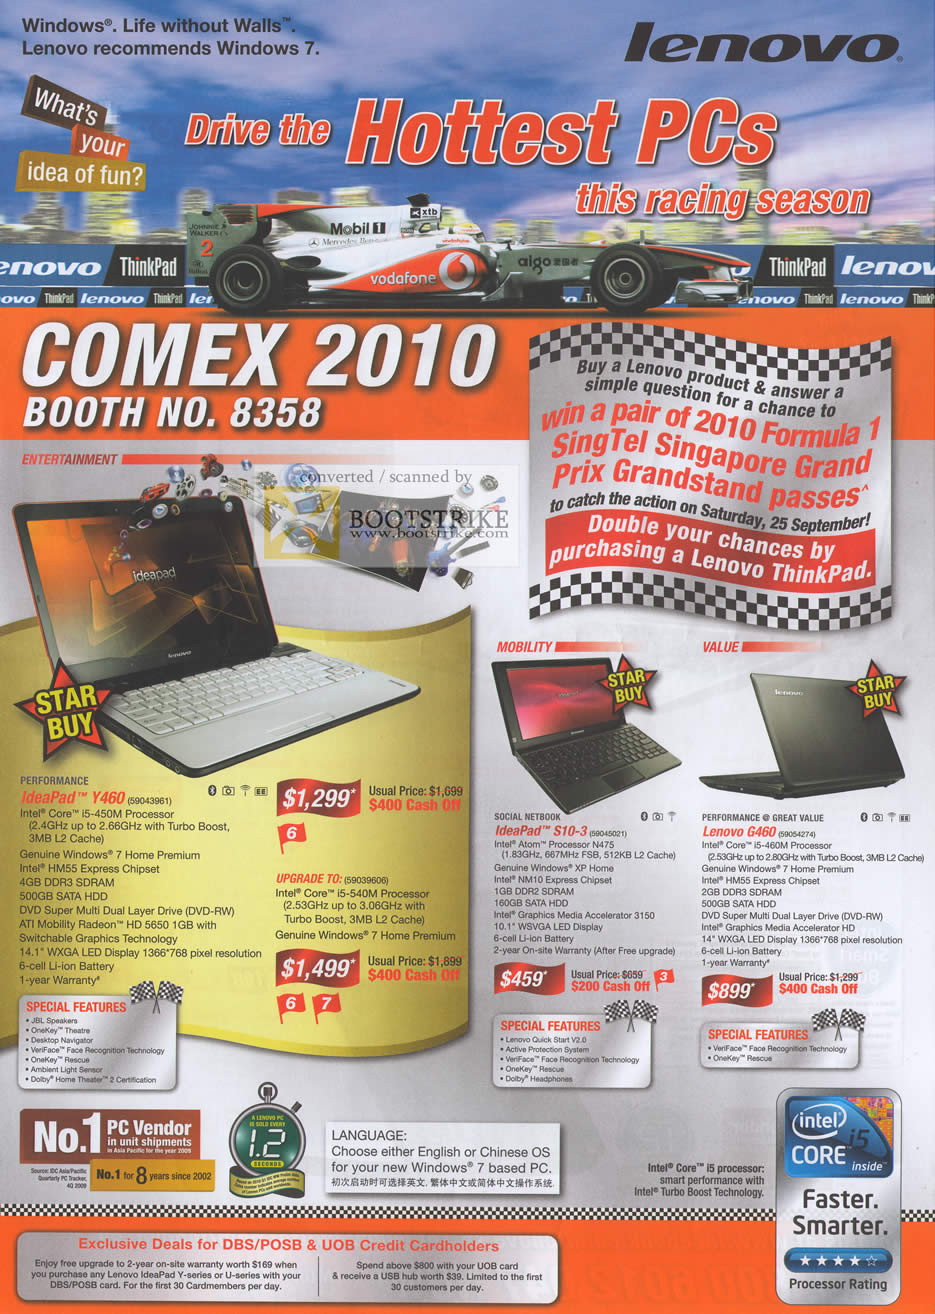 Comex 2010 price list image brochure of Lenovo Notebooks IdeaPad Y460 S10 3 G460